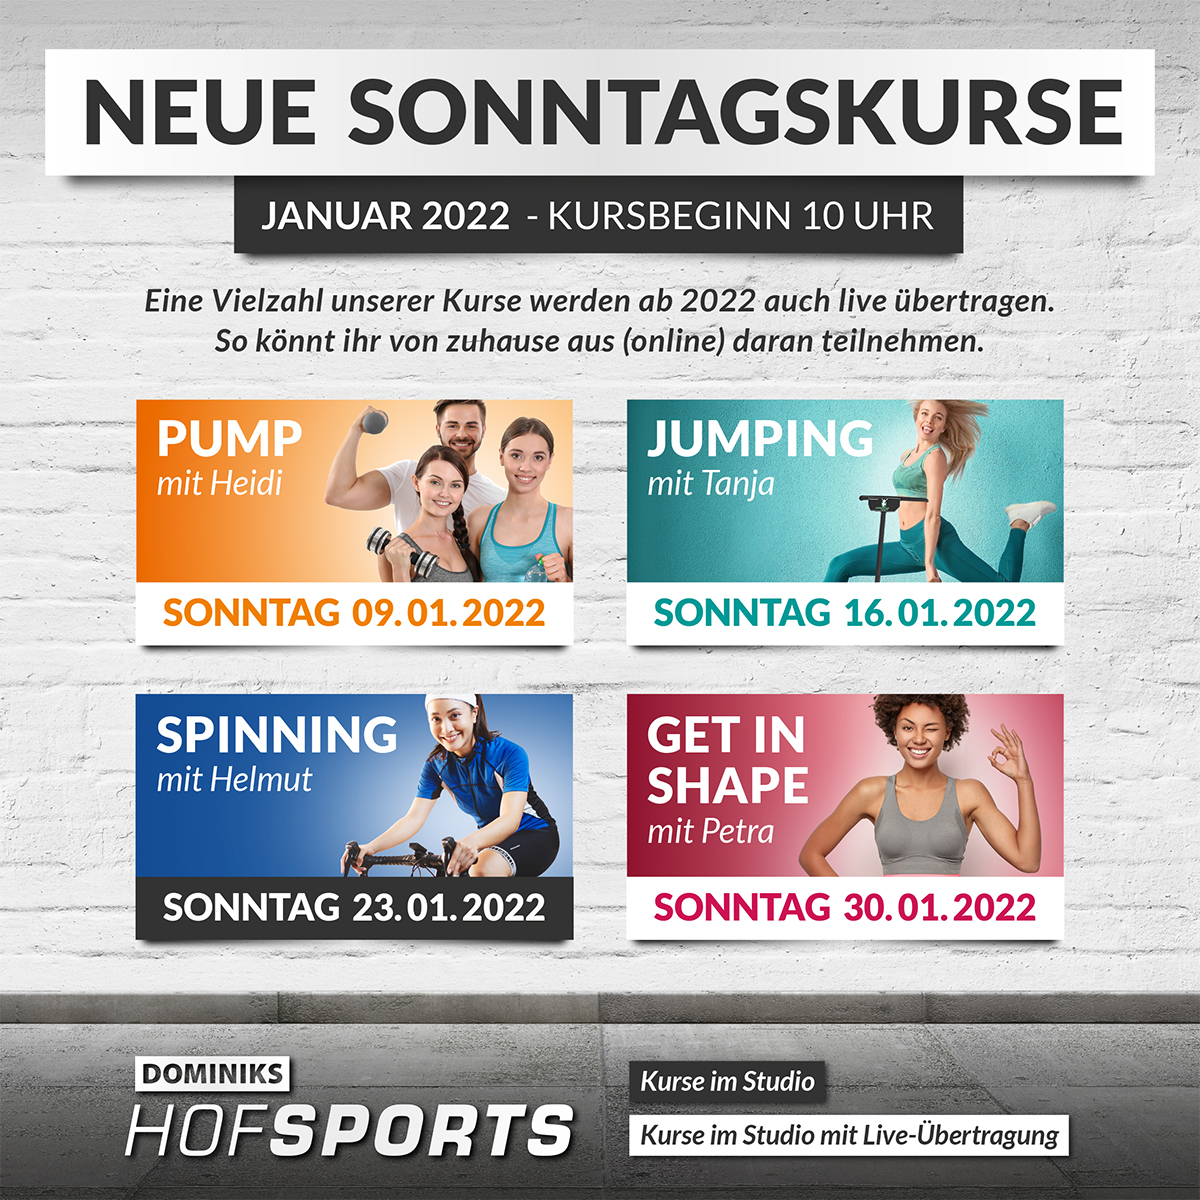 DOMINIKS-HofSports-Sonntagskurse-JANUAR-2022